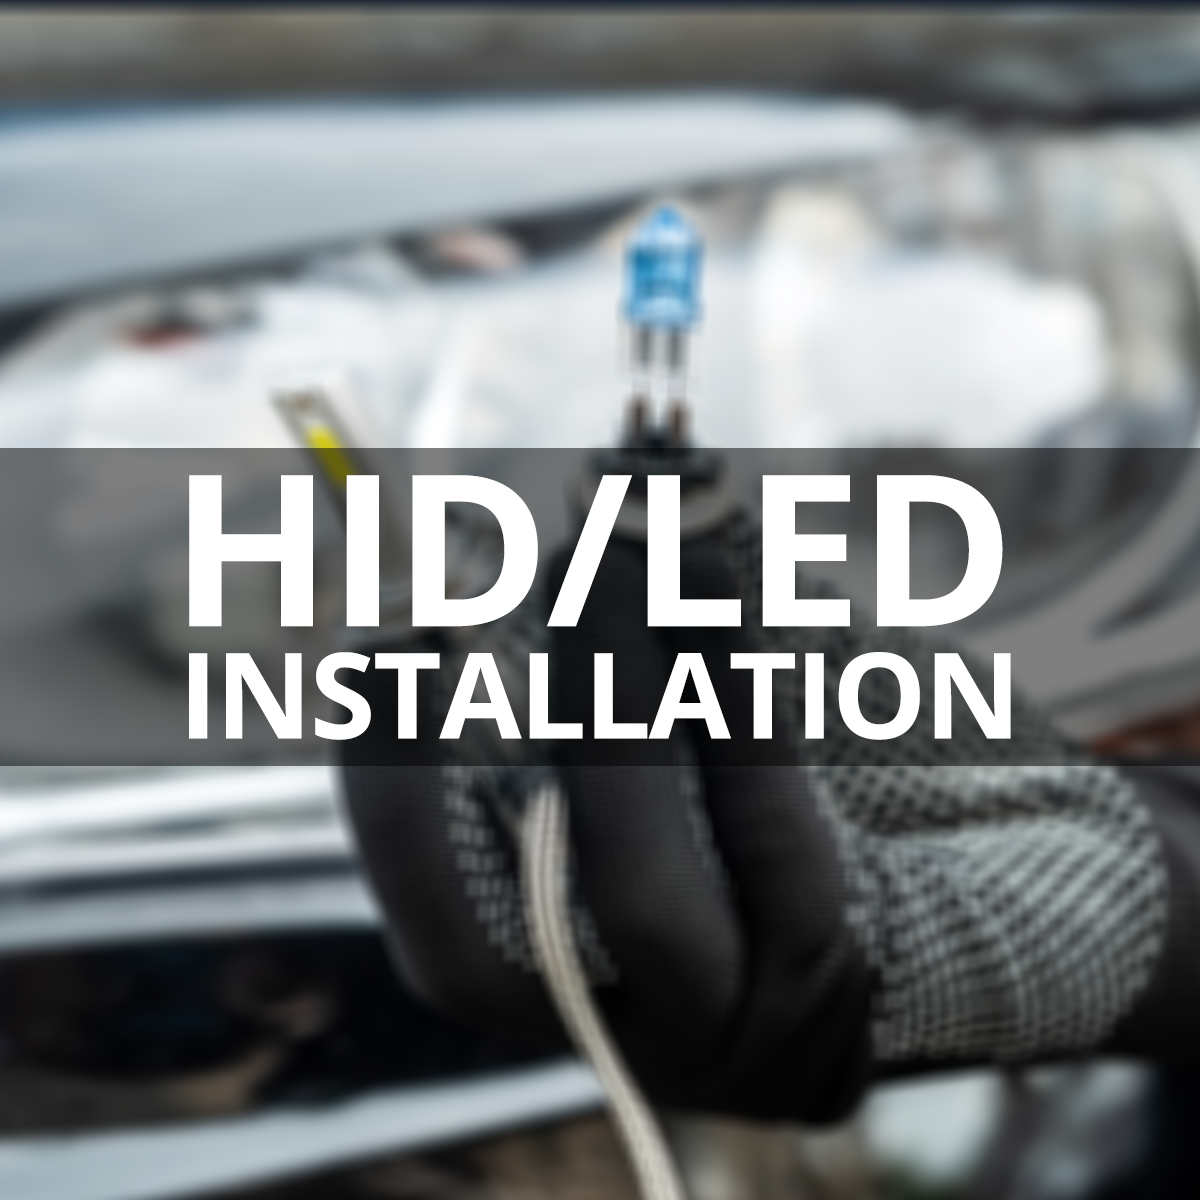 HID/LED Installation